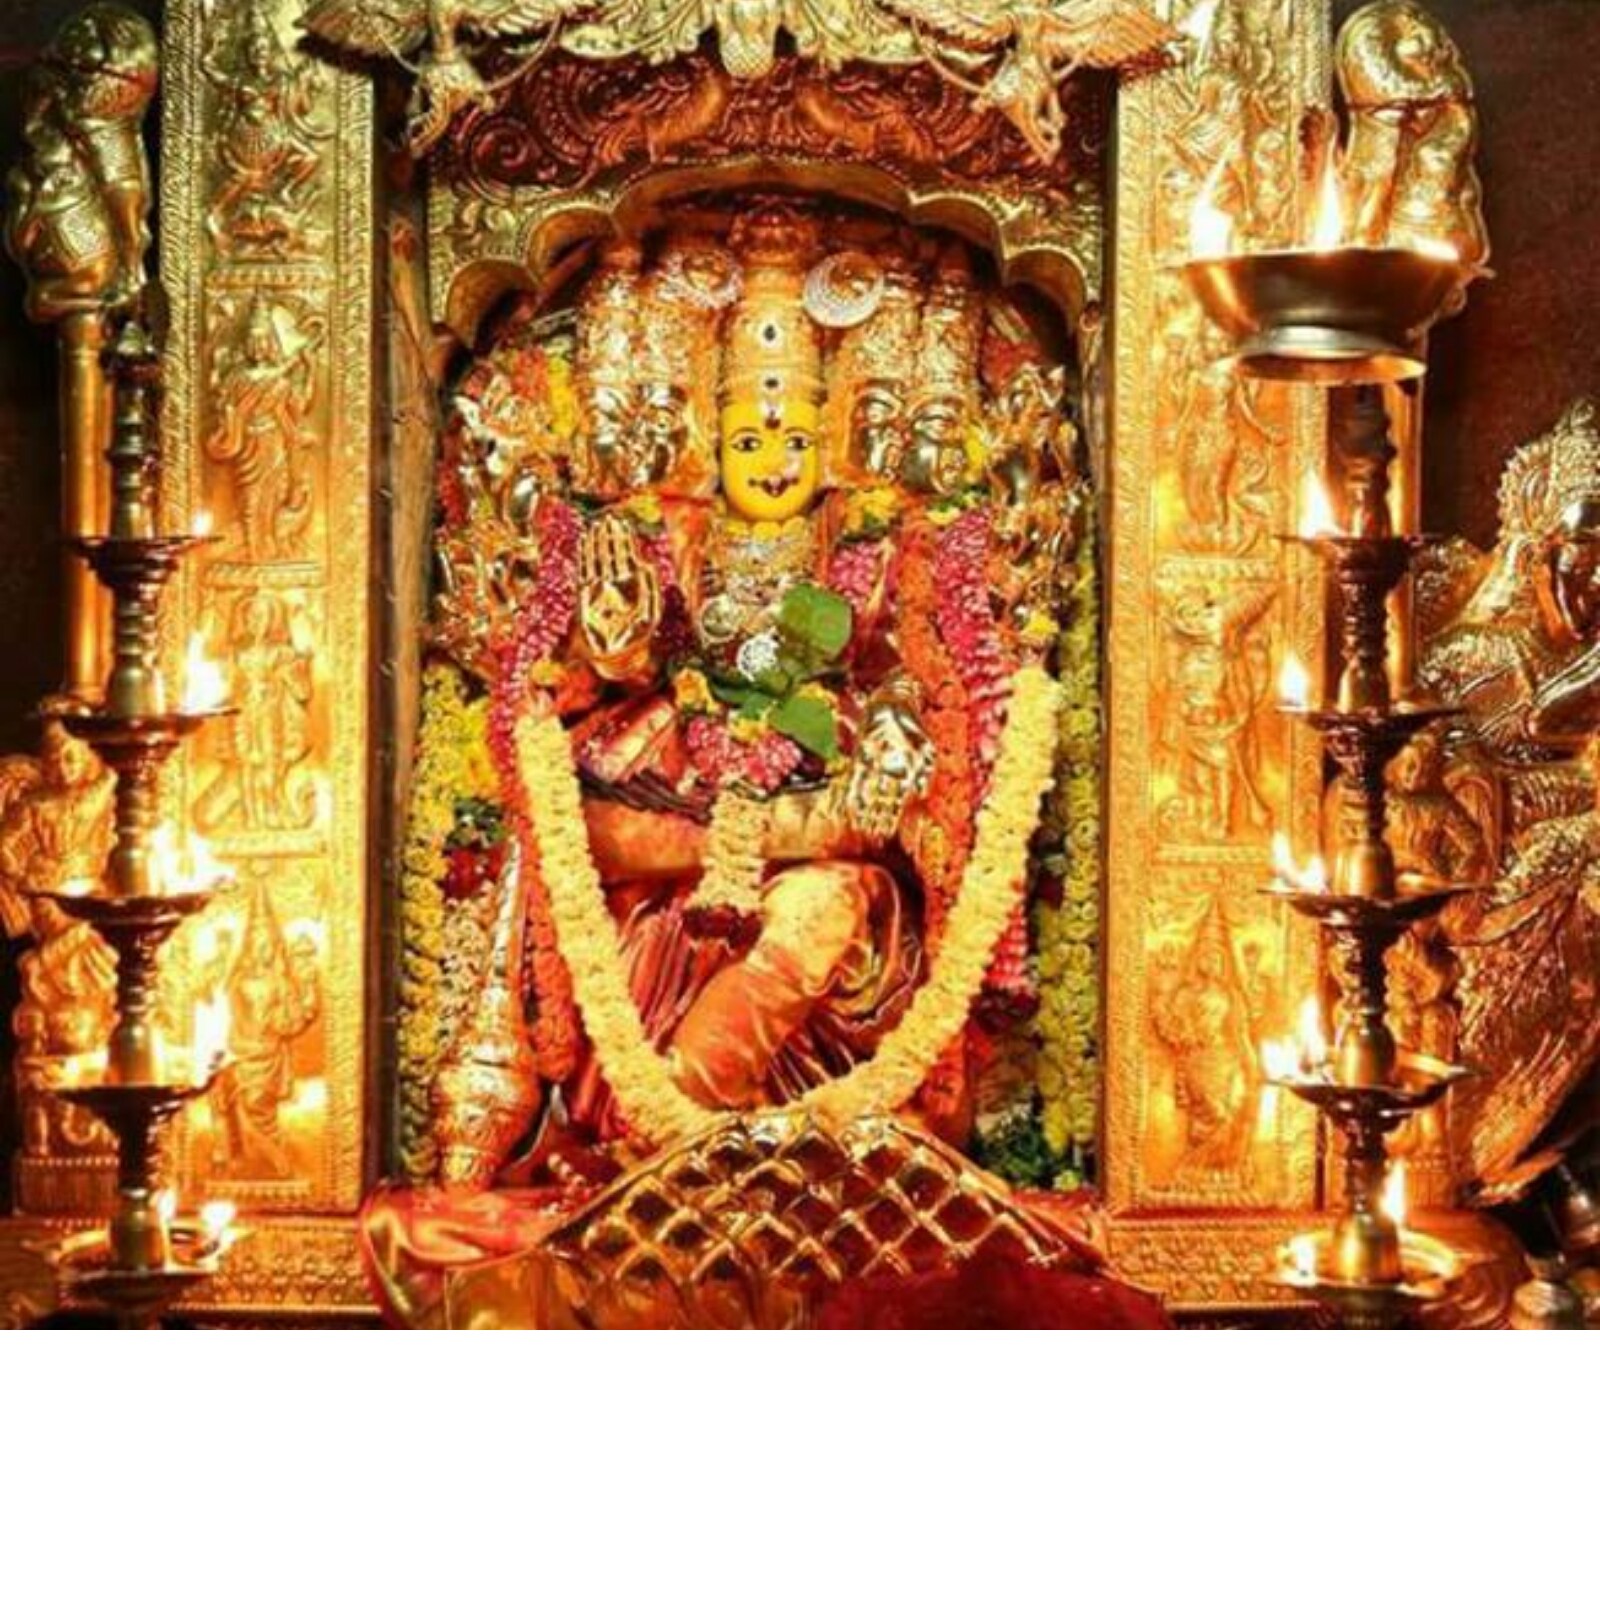 Kanaka Durga | HISTORICAL PLACES AND TEMPLES IN ANDHRA PRADESH